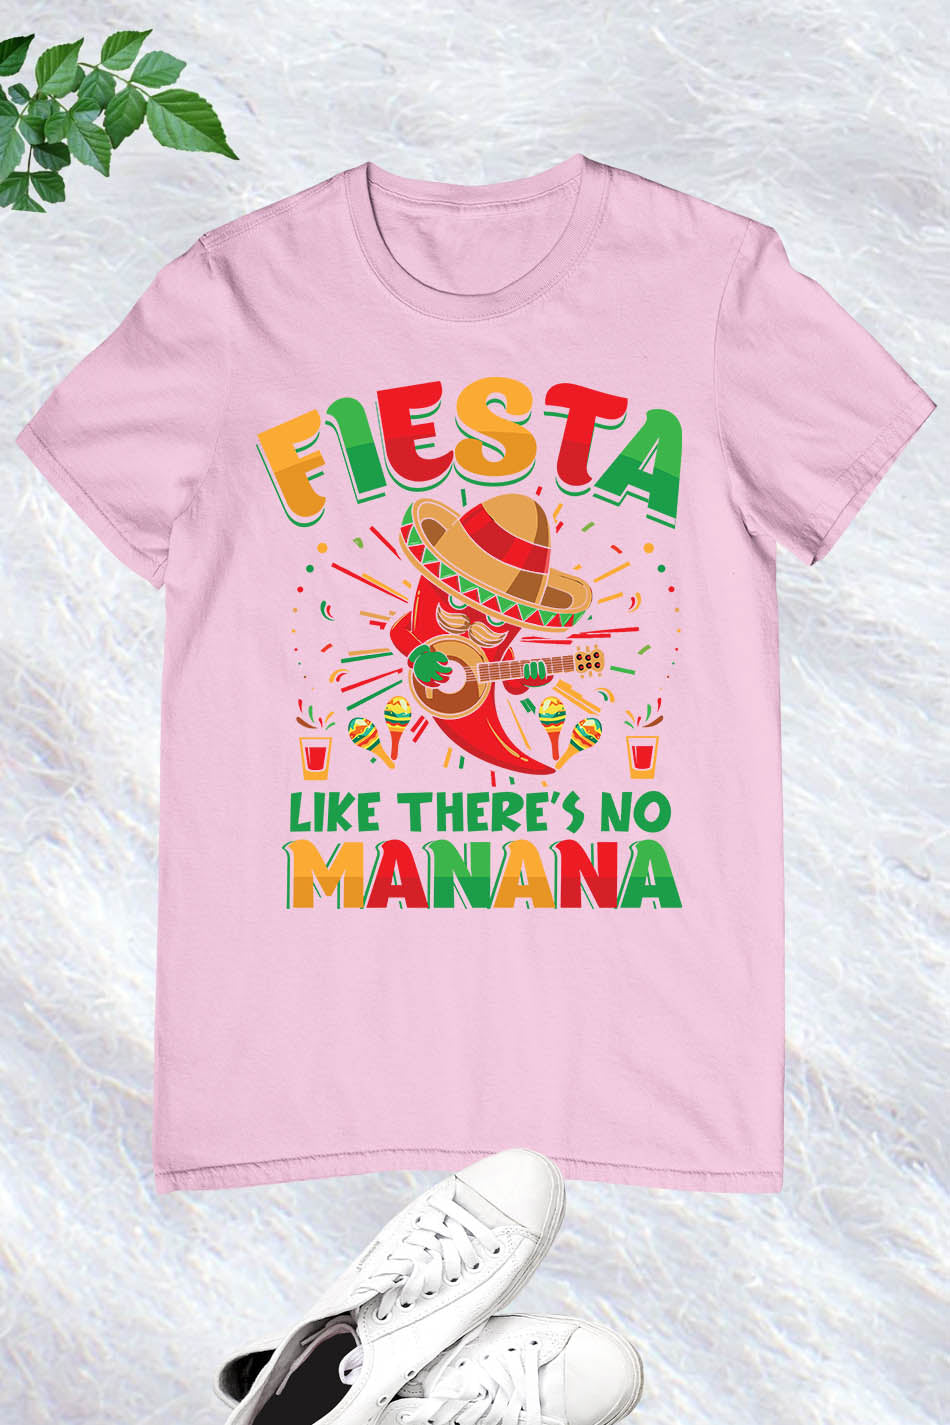 Fiesta Like There's No Manana T-shirt